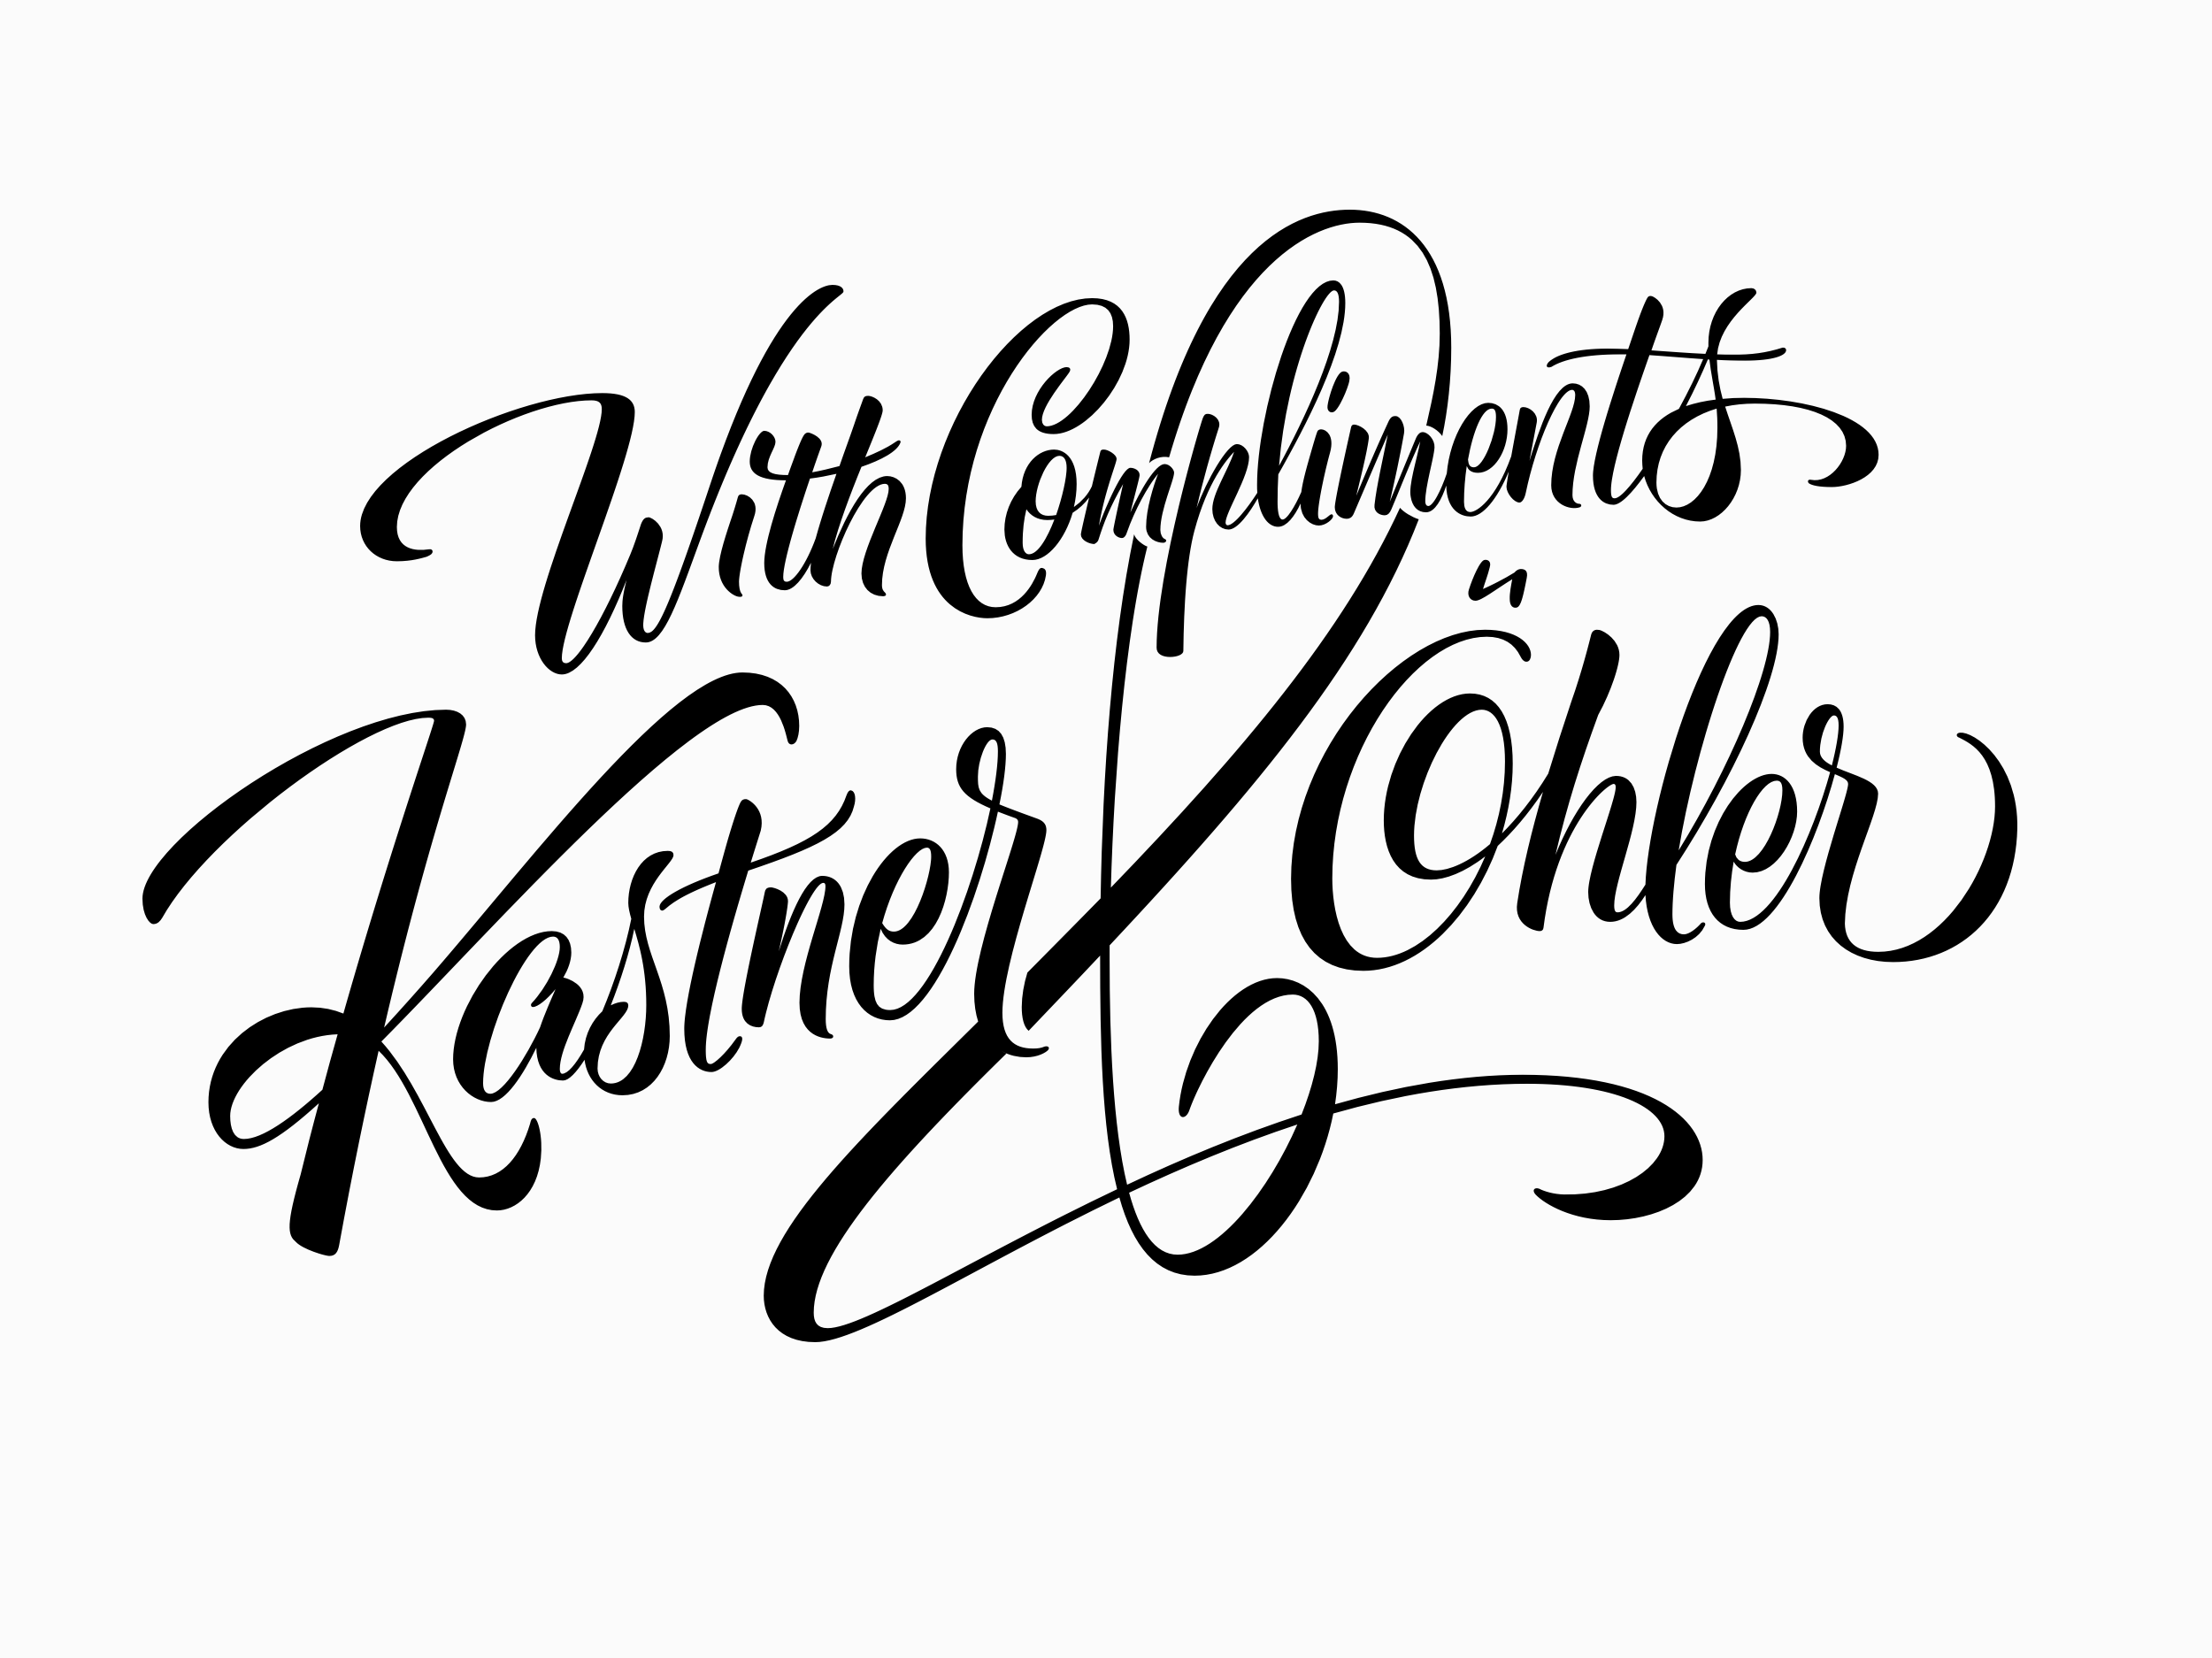 Austrian Modern Calligraphy Font - So Fontsy